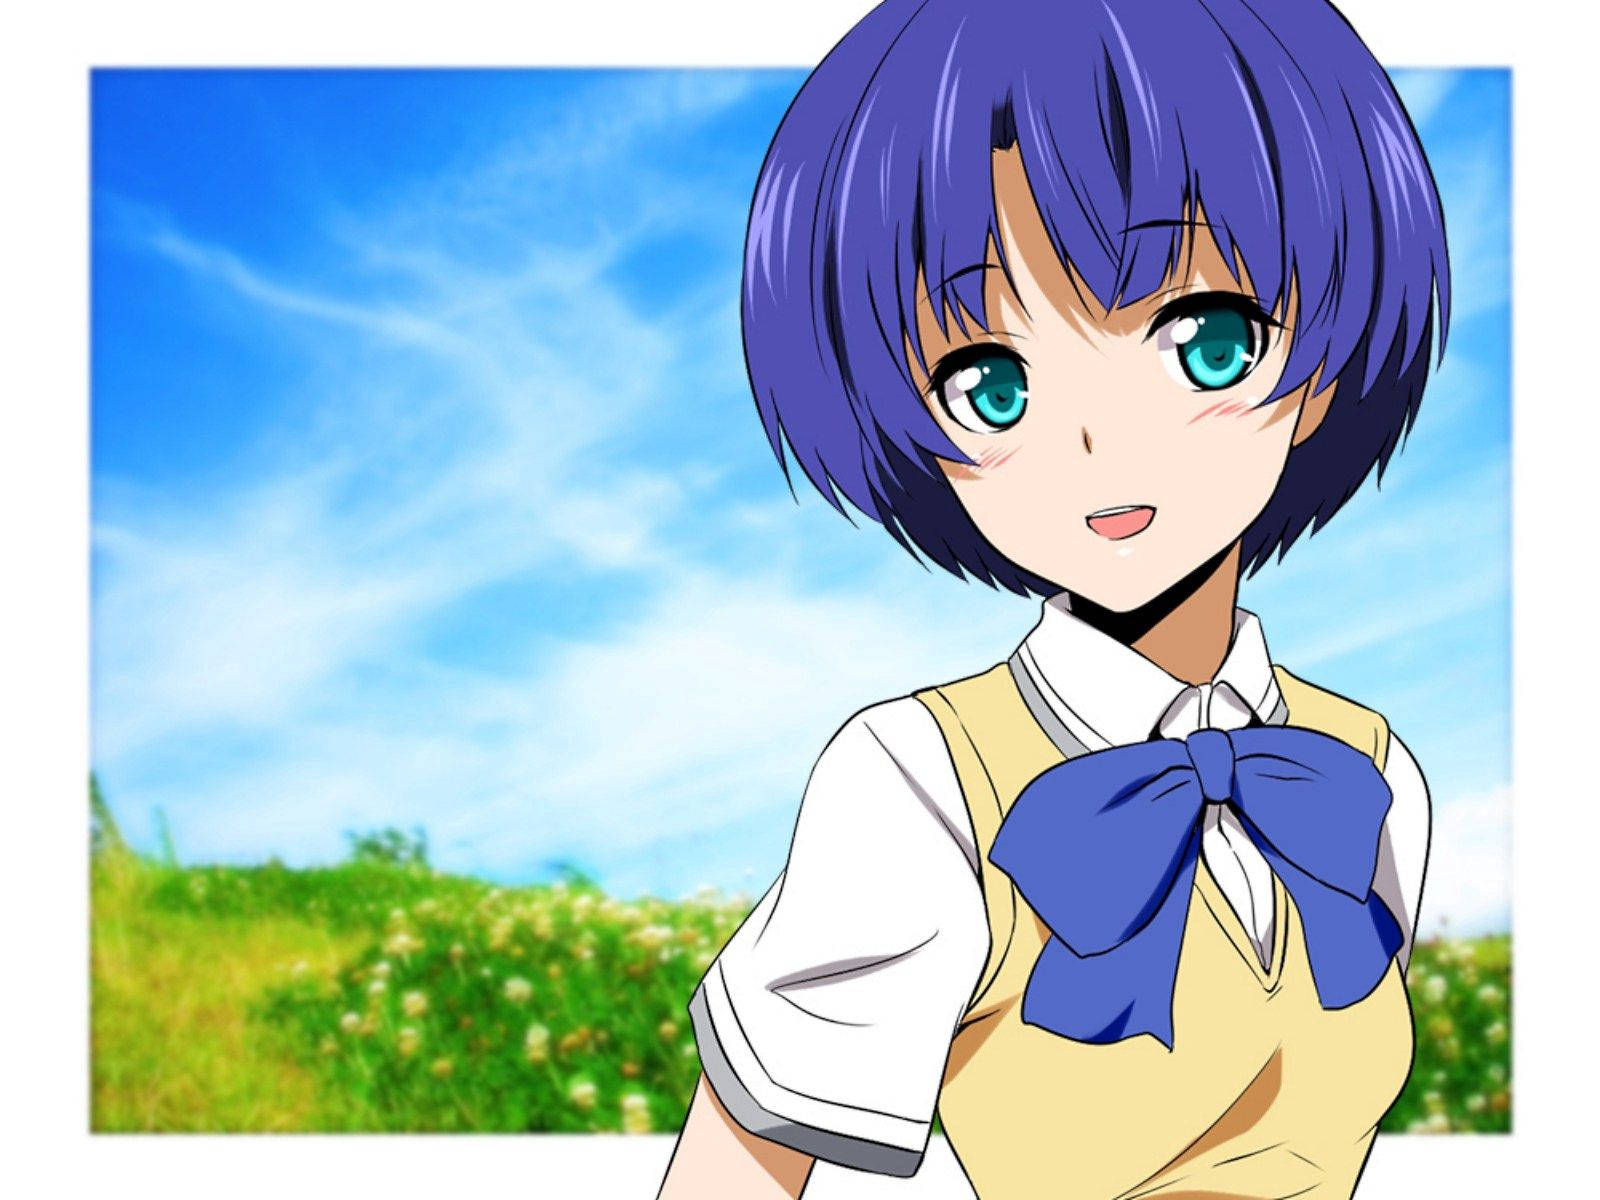 Cute Anime Girl In The Field Wallpaper